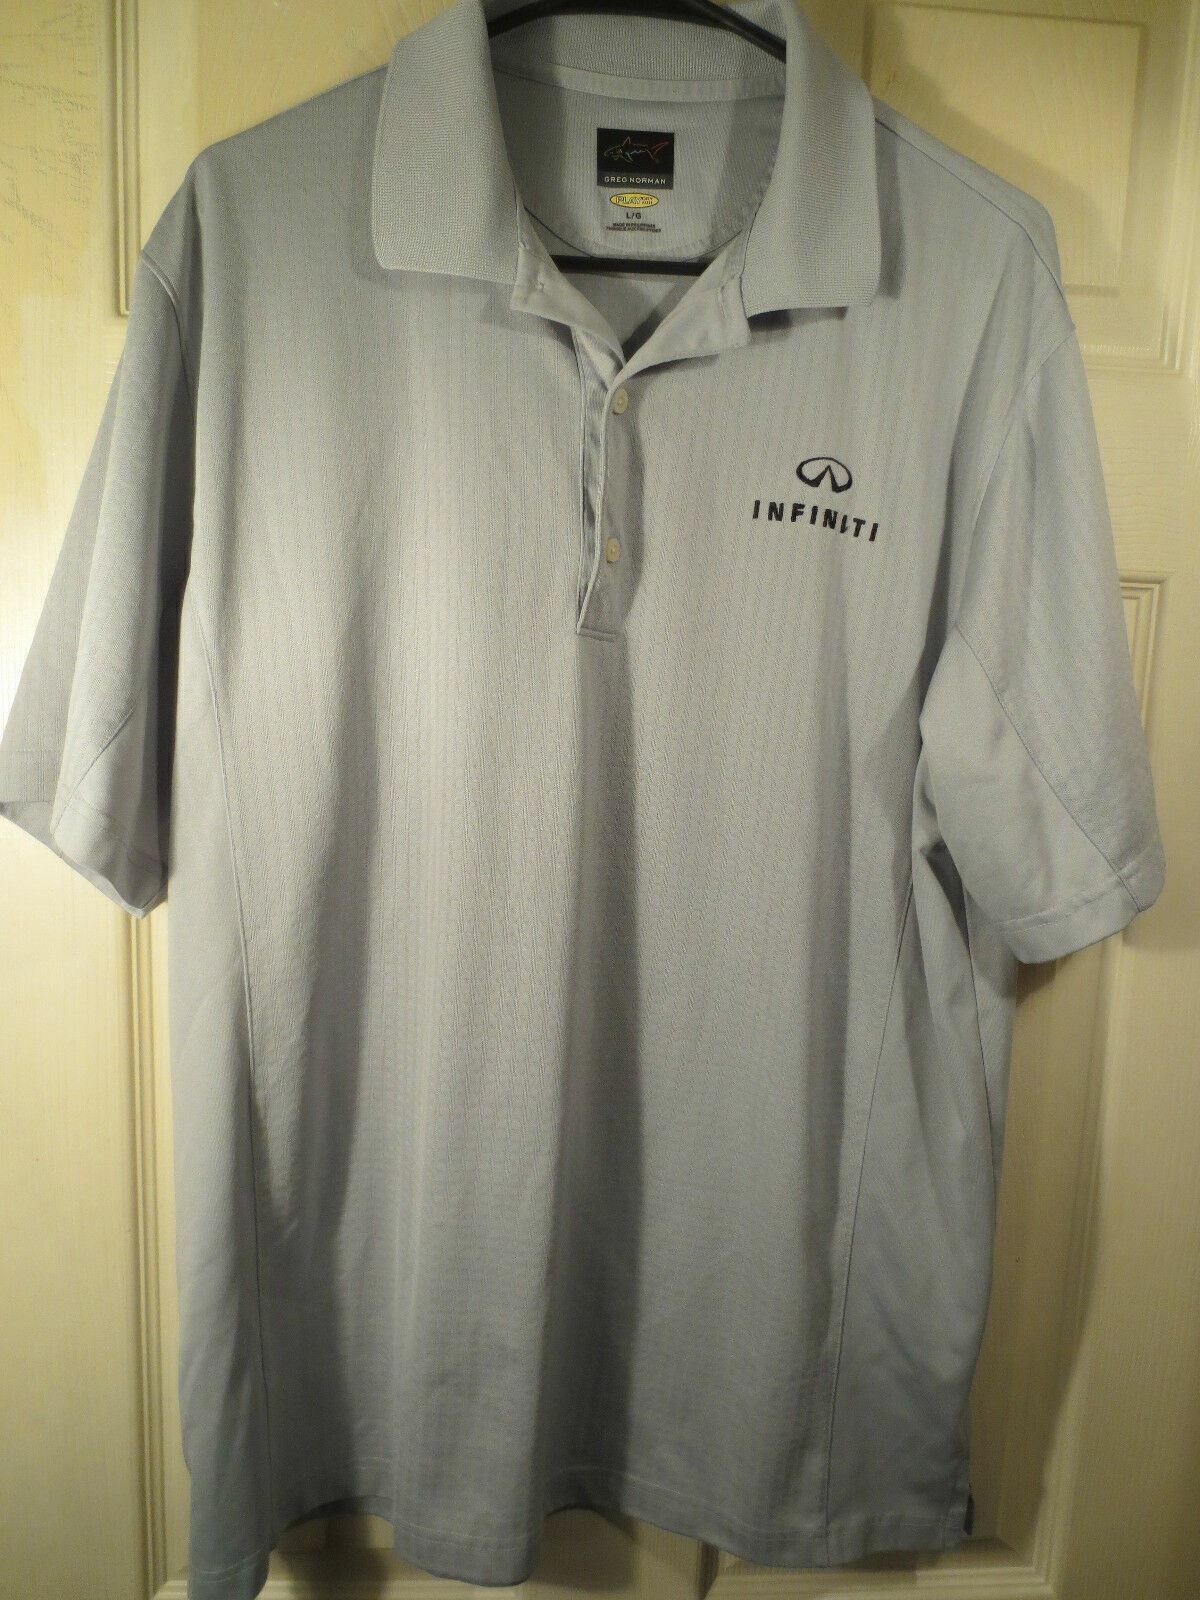 Greg Norman Play Dry INFINITI Gray Polo Golf Shirt Size Large